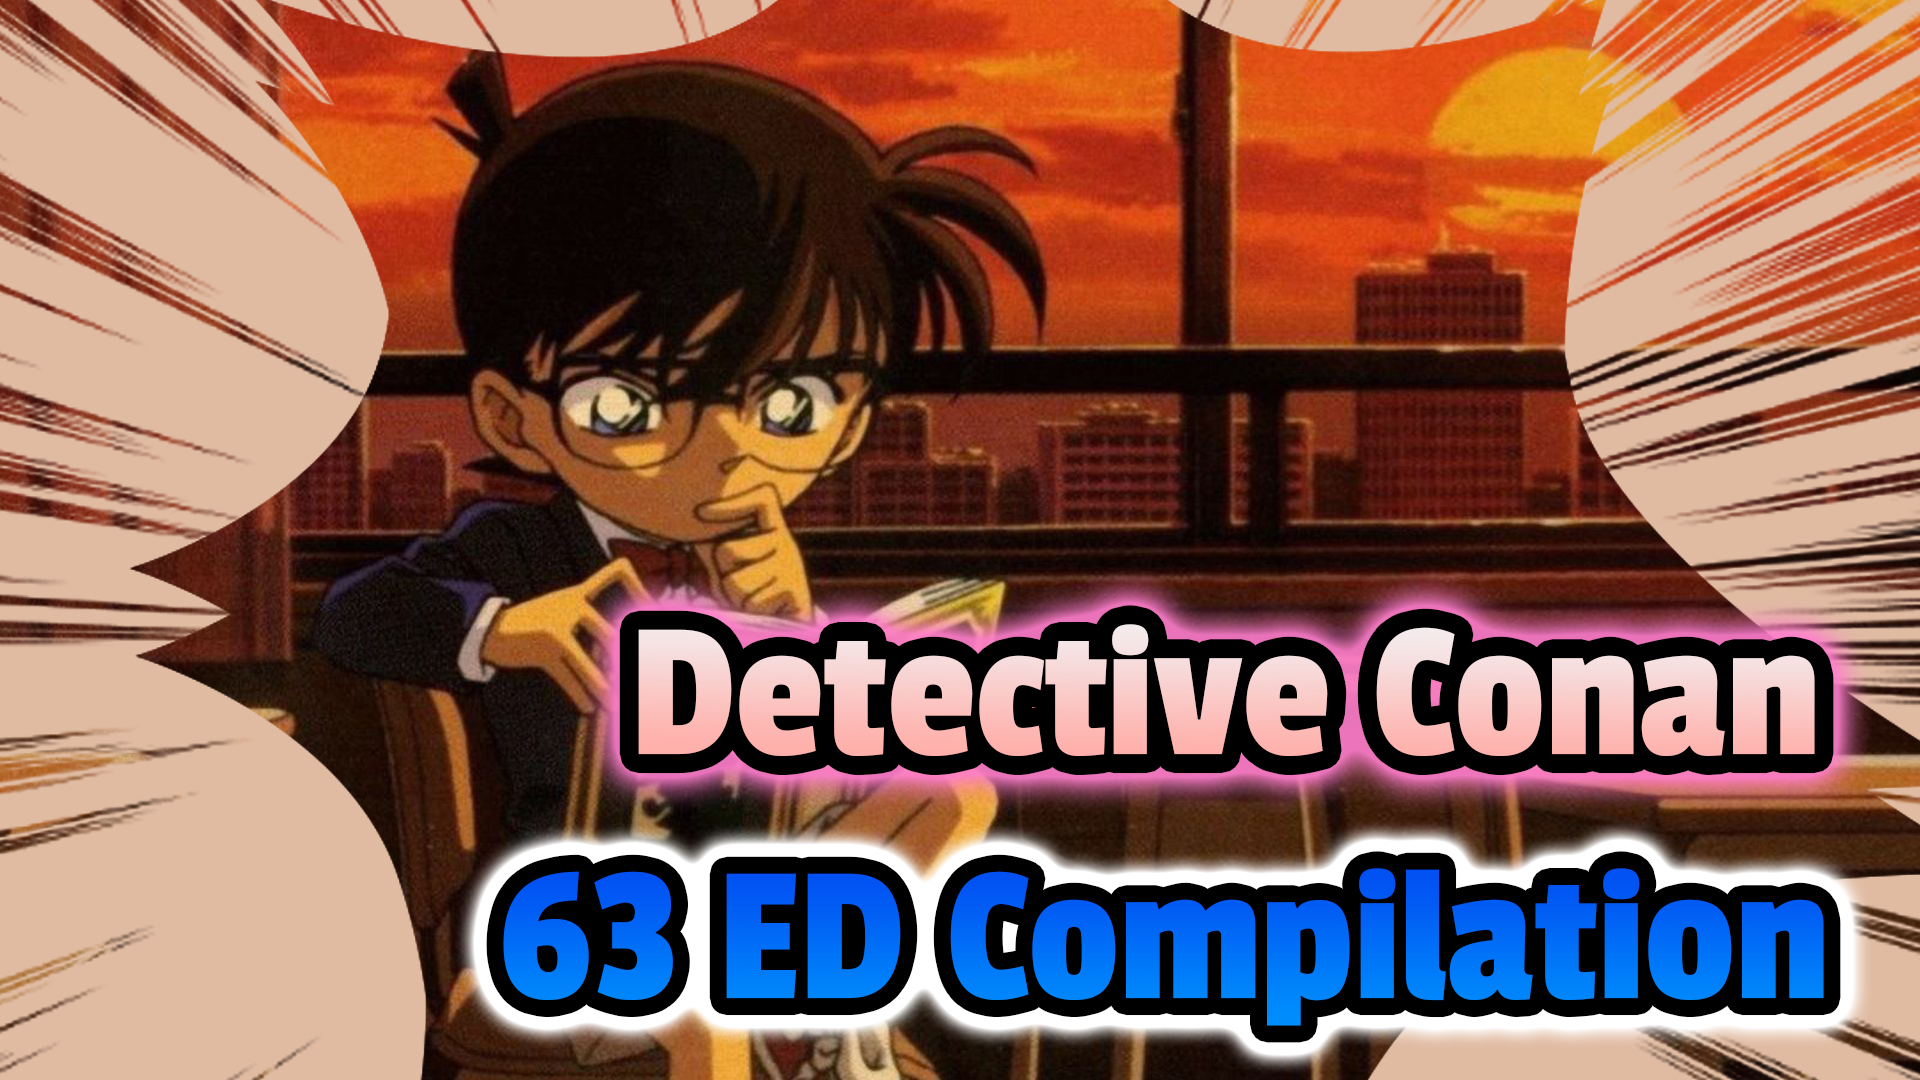 Detective Conan NCED 63 Ending Songs Compilation - Bilibili